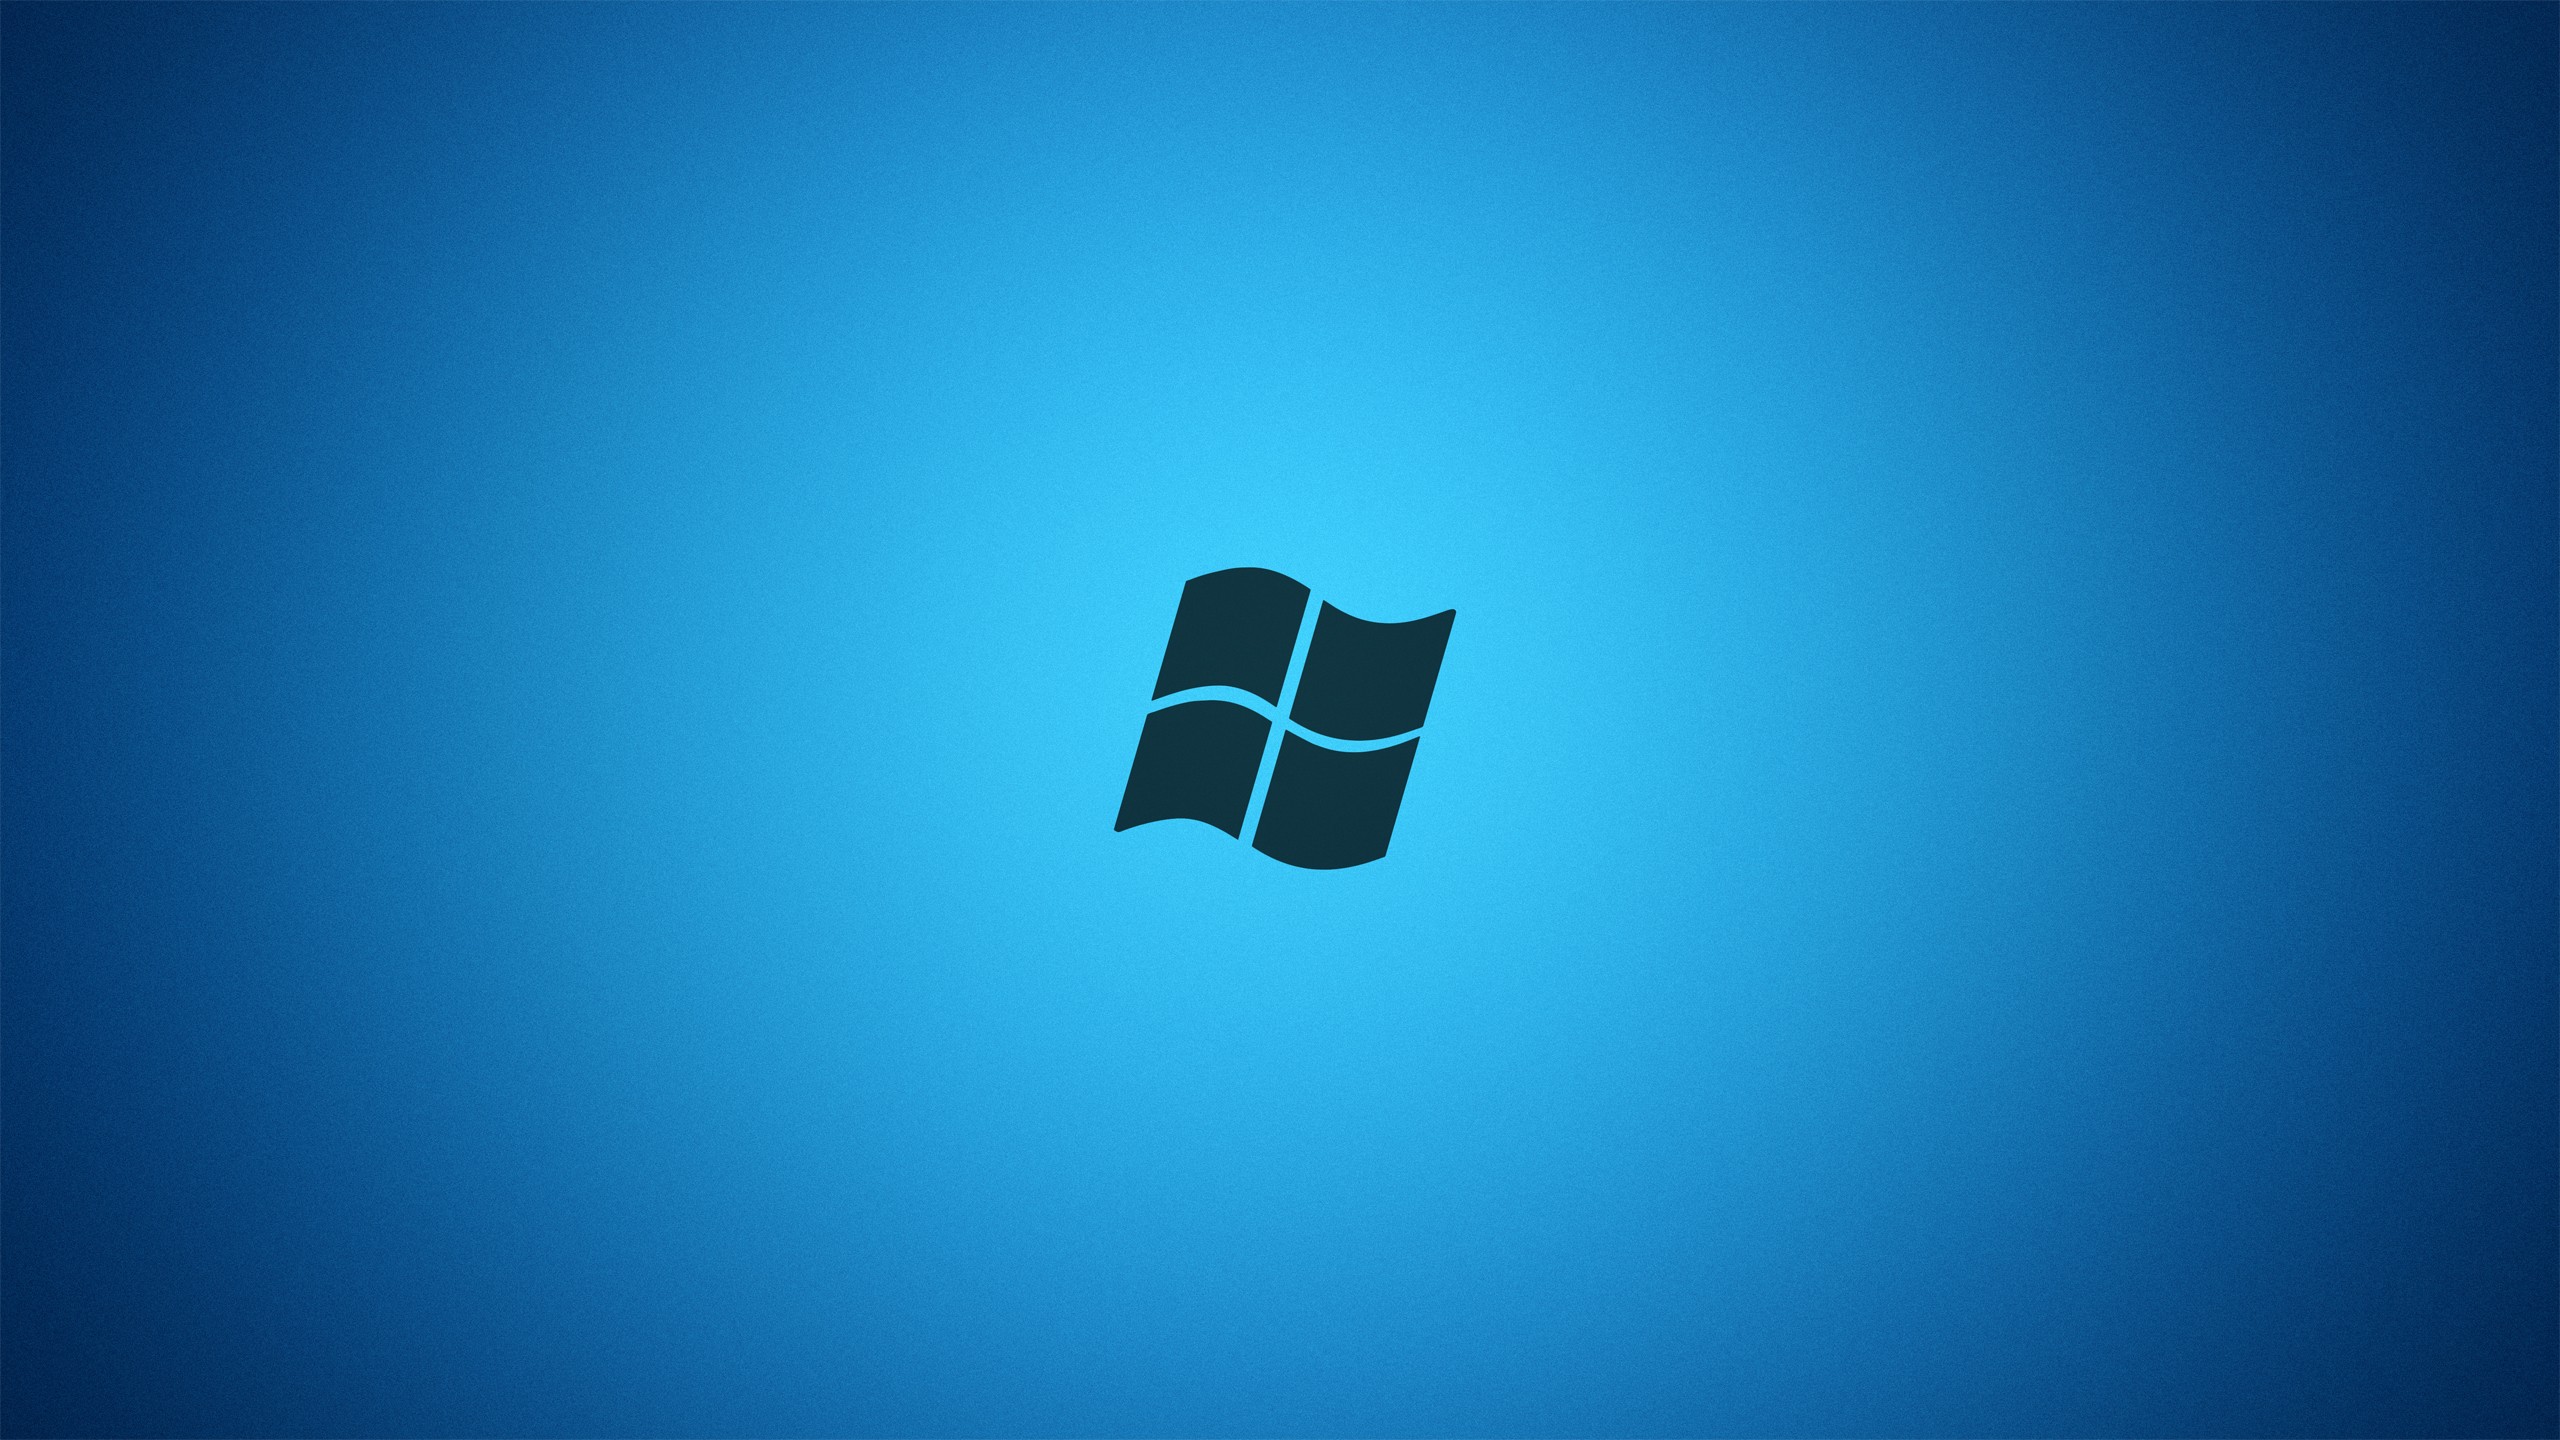 🔥 Download Blue Windows Background Wallpaper By Jessew77 Windows